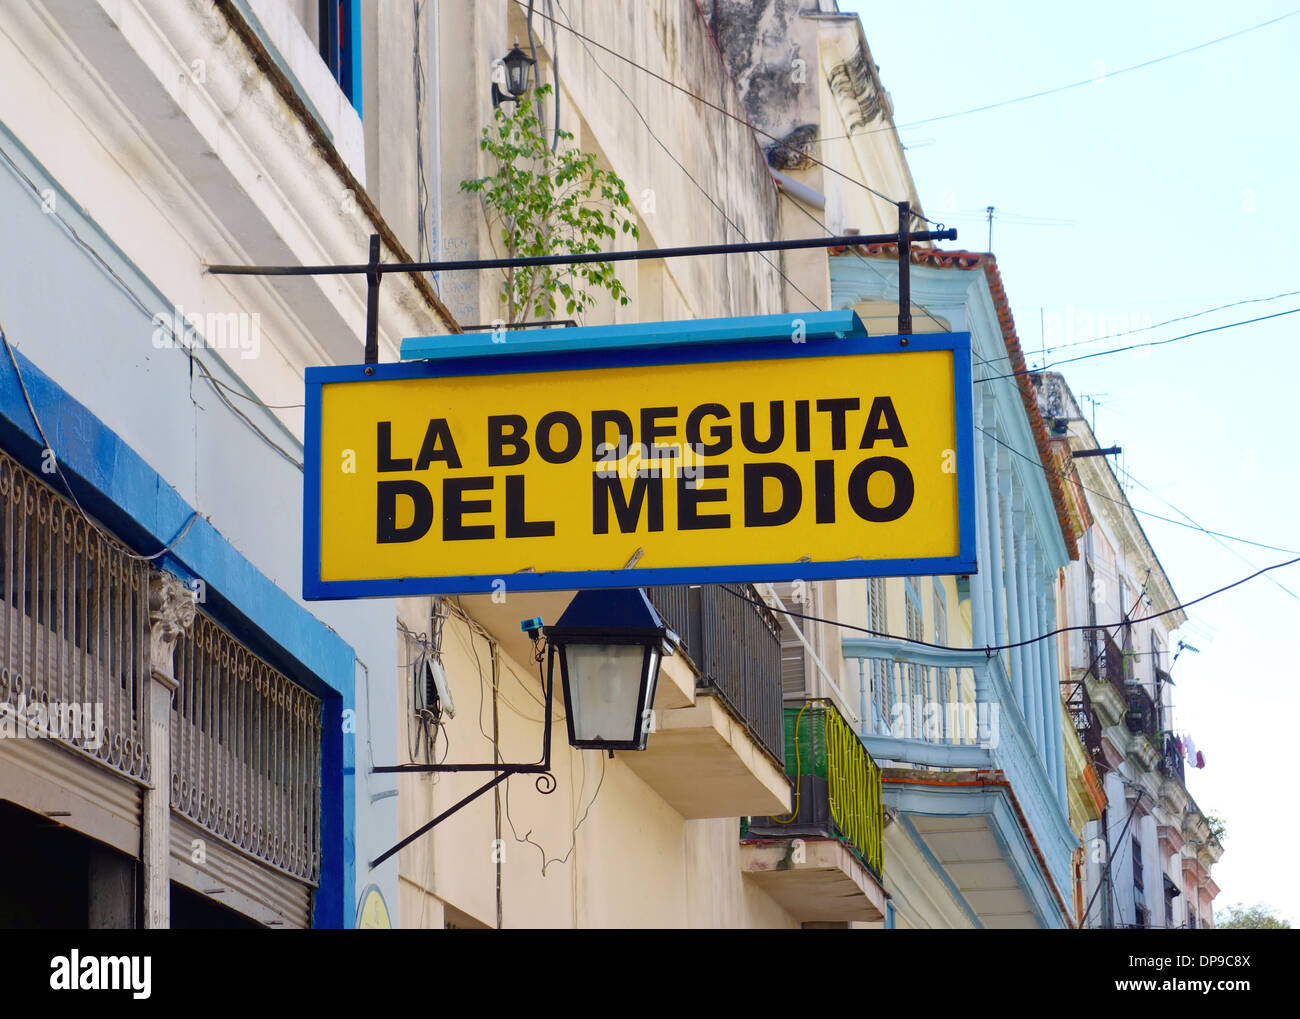 La Bodeguita del Medio Sign in Havana, Cuba Stock Photo